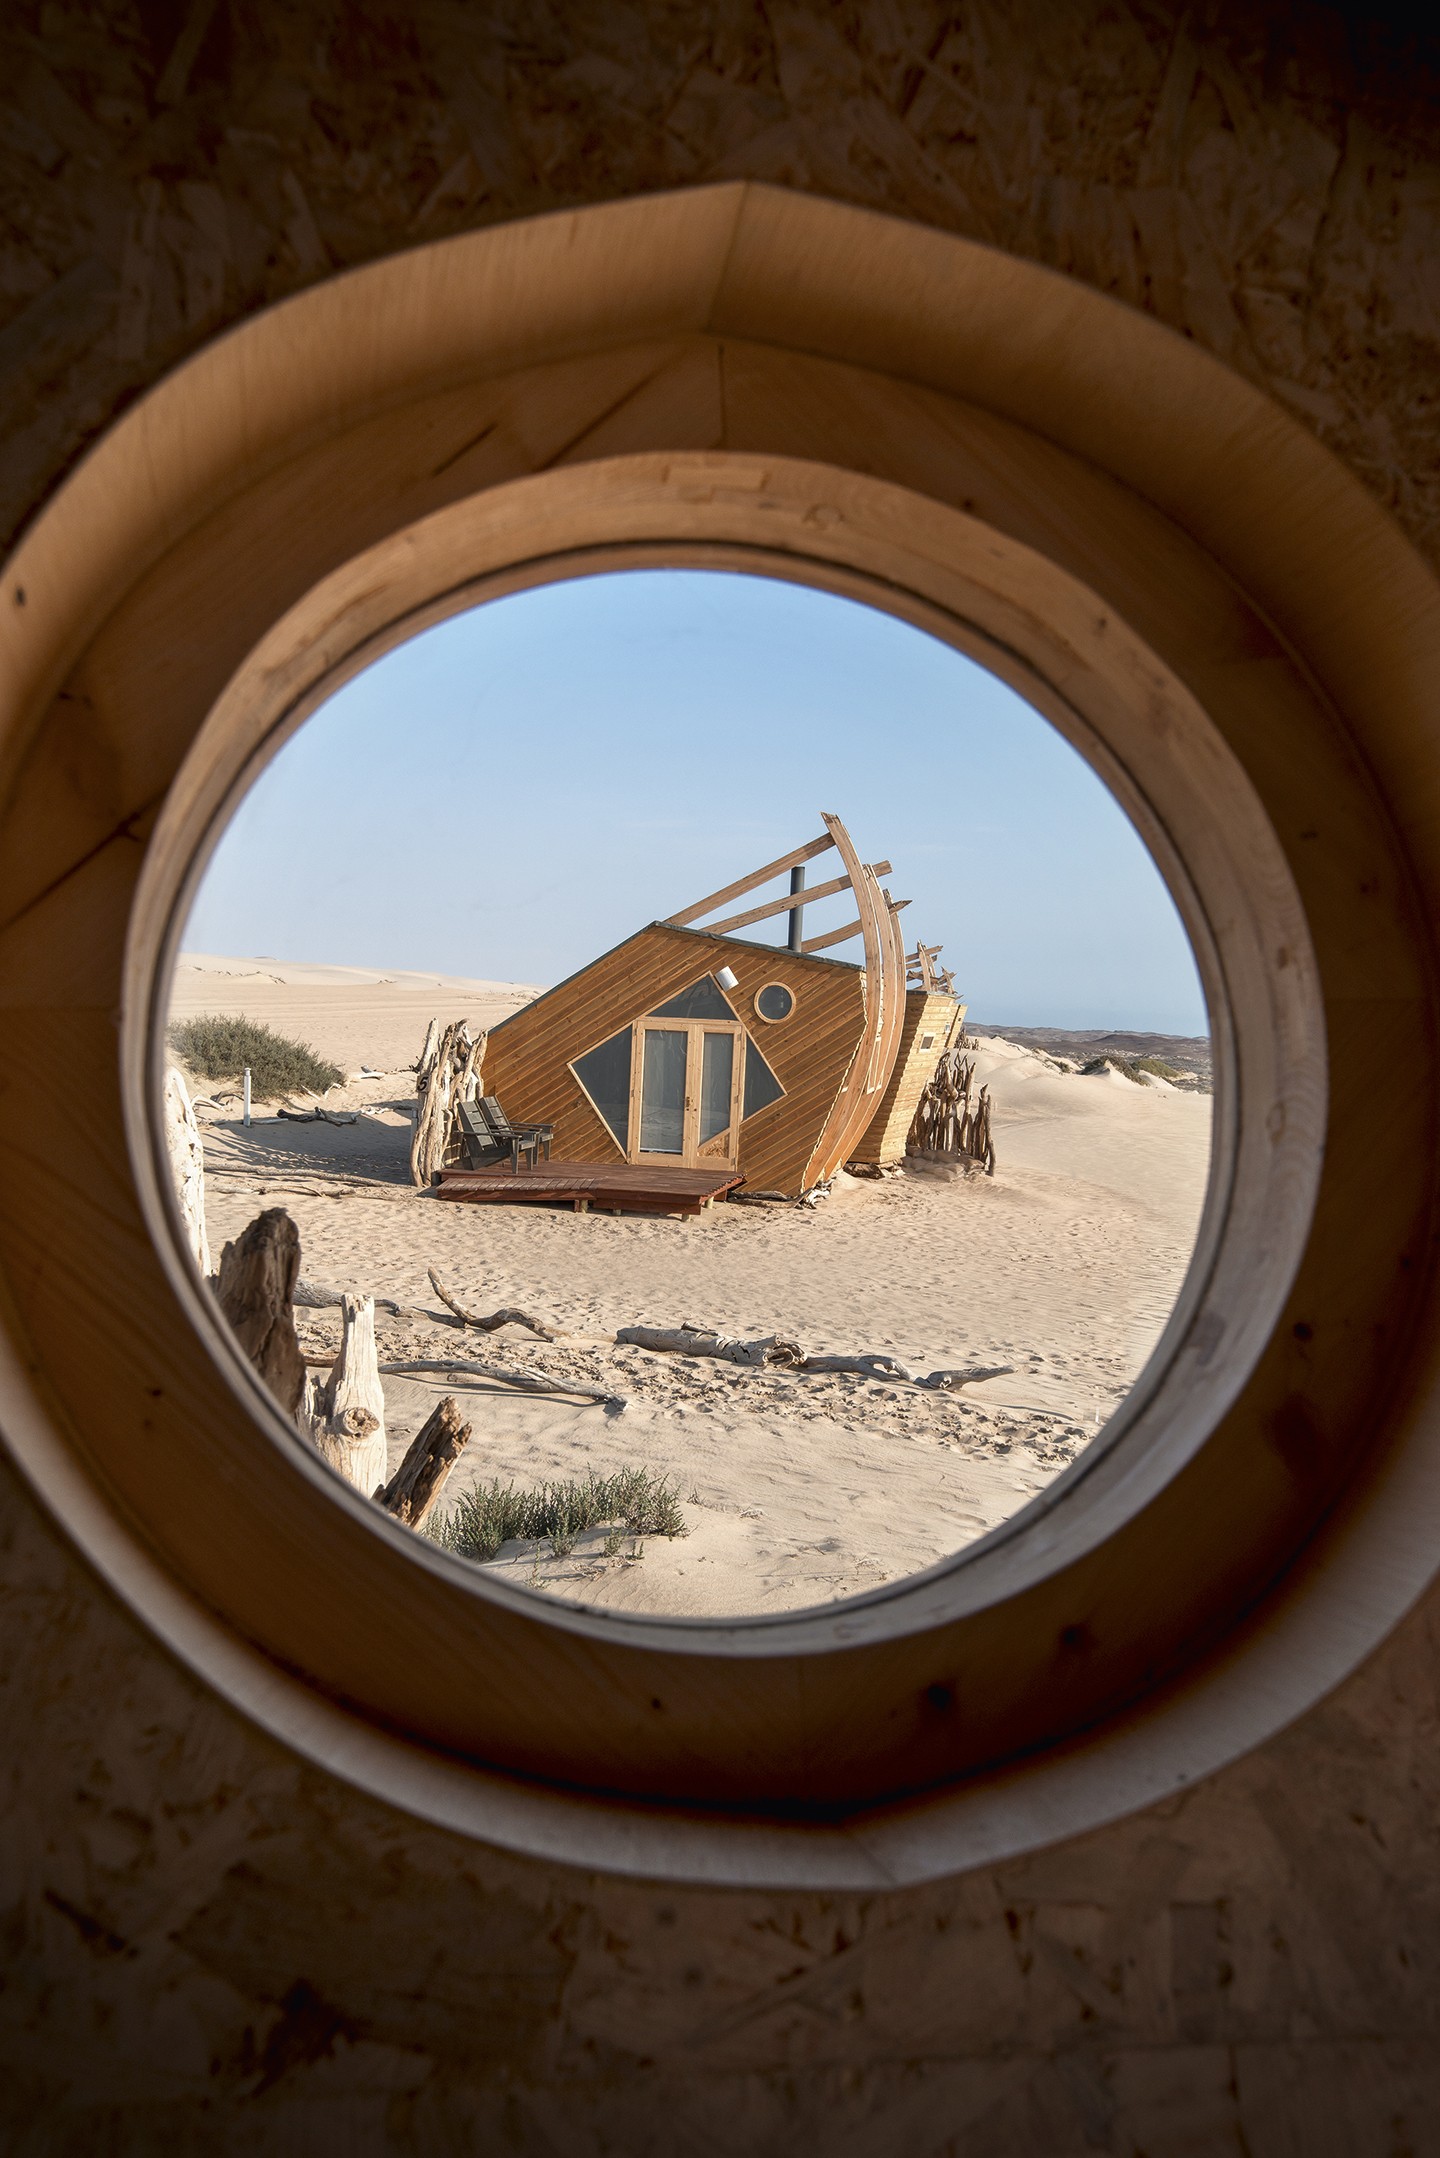 shipwreck_lodge_Namibia_with desert activities (Foto: Michael Turek, Zannier Hotels e divulgação)